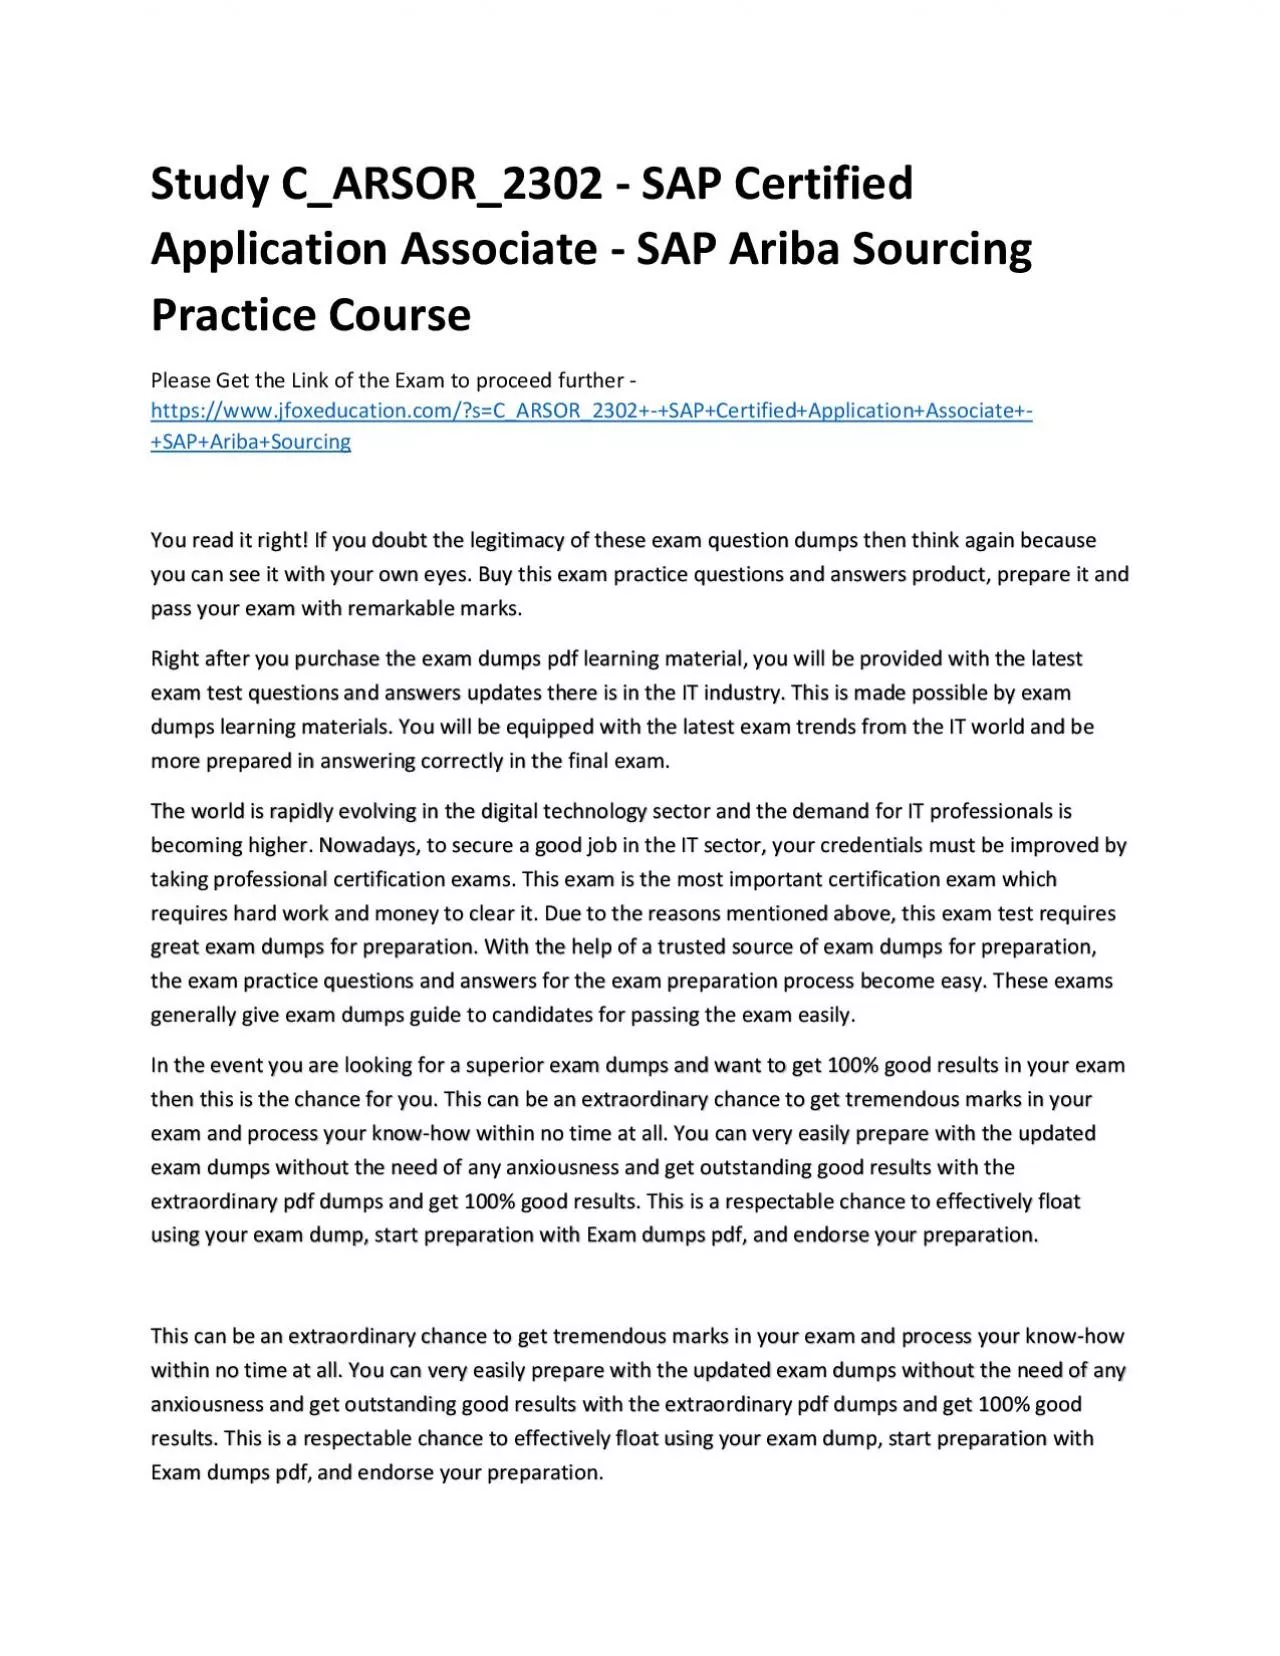 Study C_ARSOR_2302 - SAP Certified Application Associate - SAP Ariba Sourcing Practice